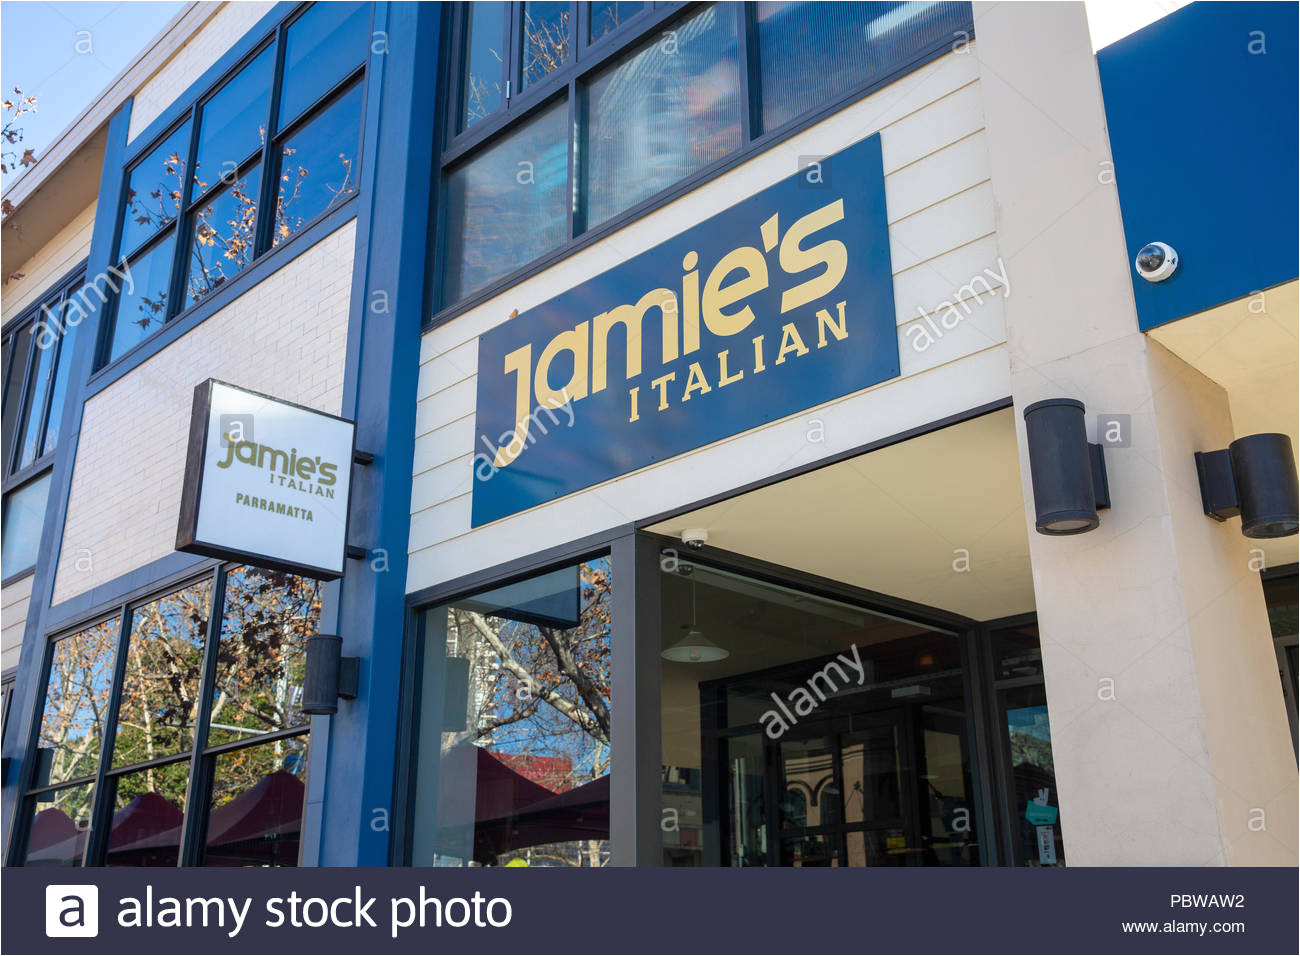 jamies italian restaurant in centenary square parramatta which closed in june 2018western sydneyaustralia pbwaw2 jpg